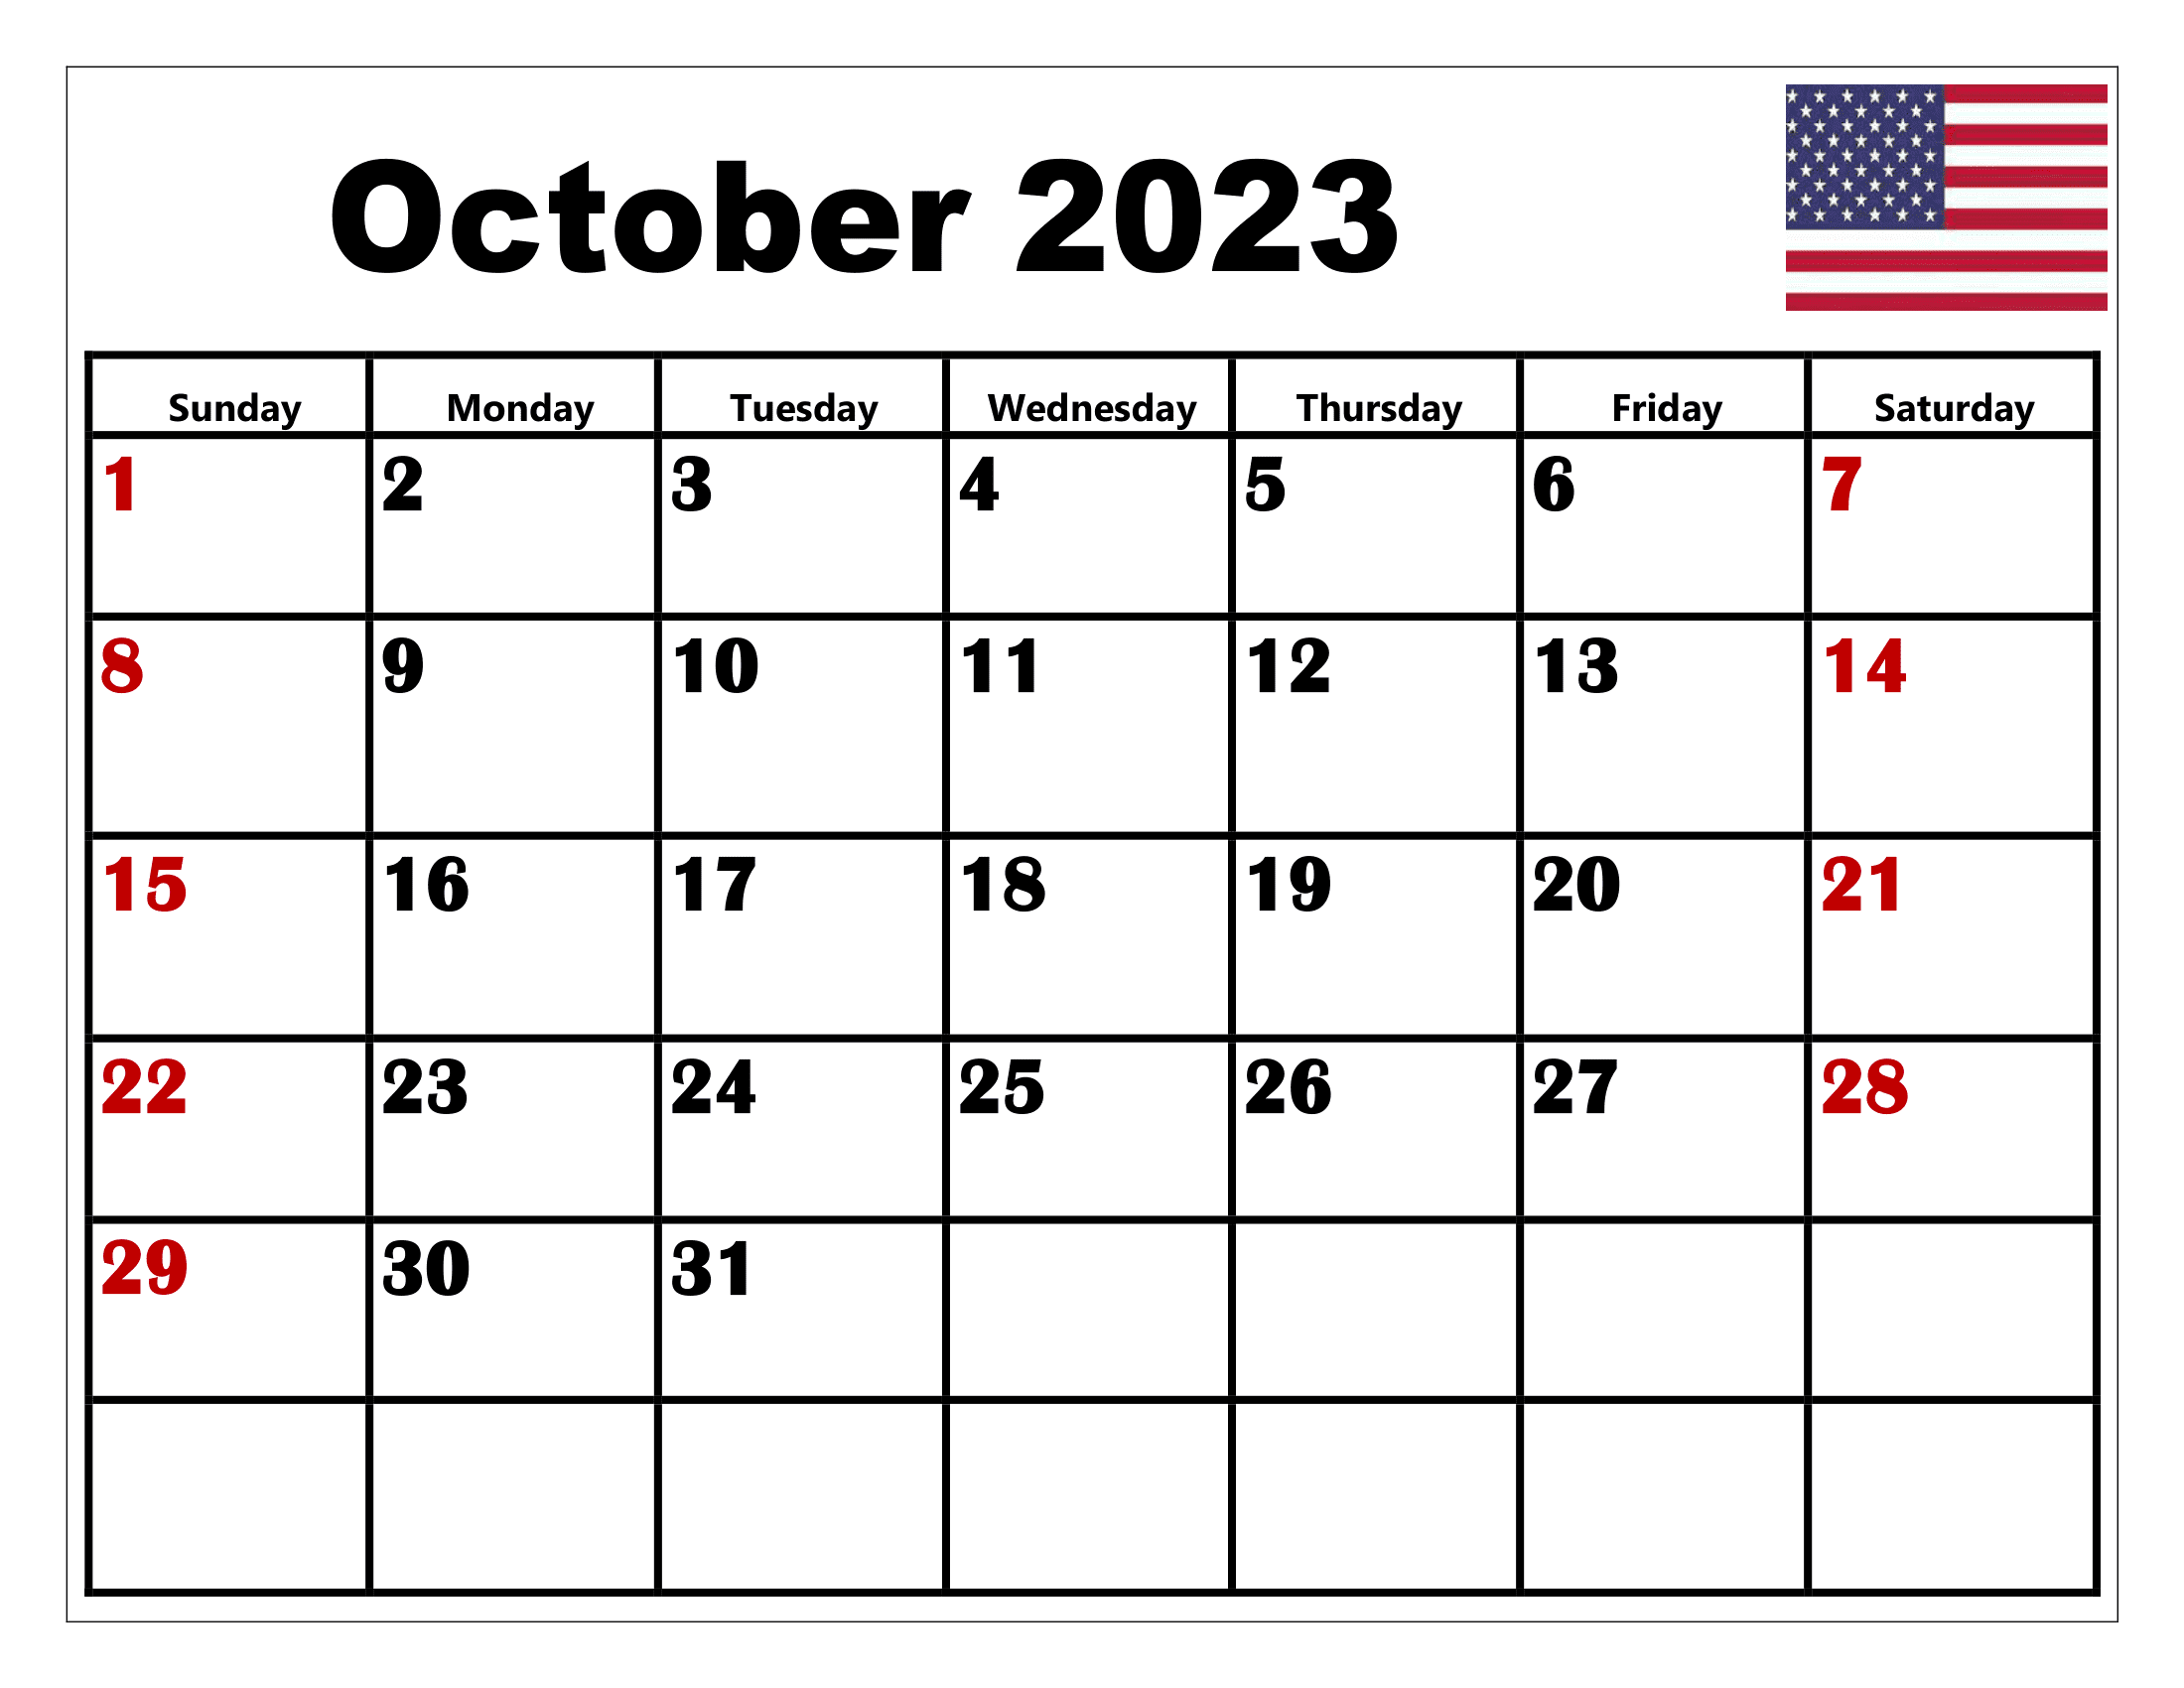 October 2023 Holidays Calendar USA